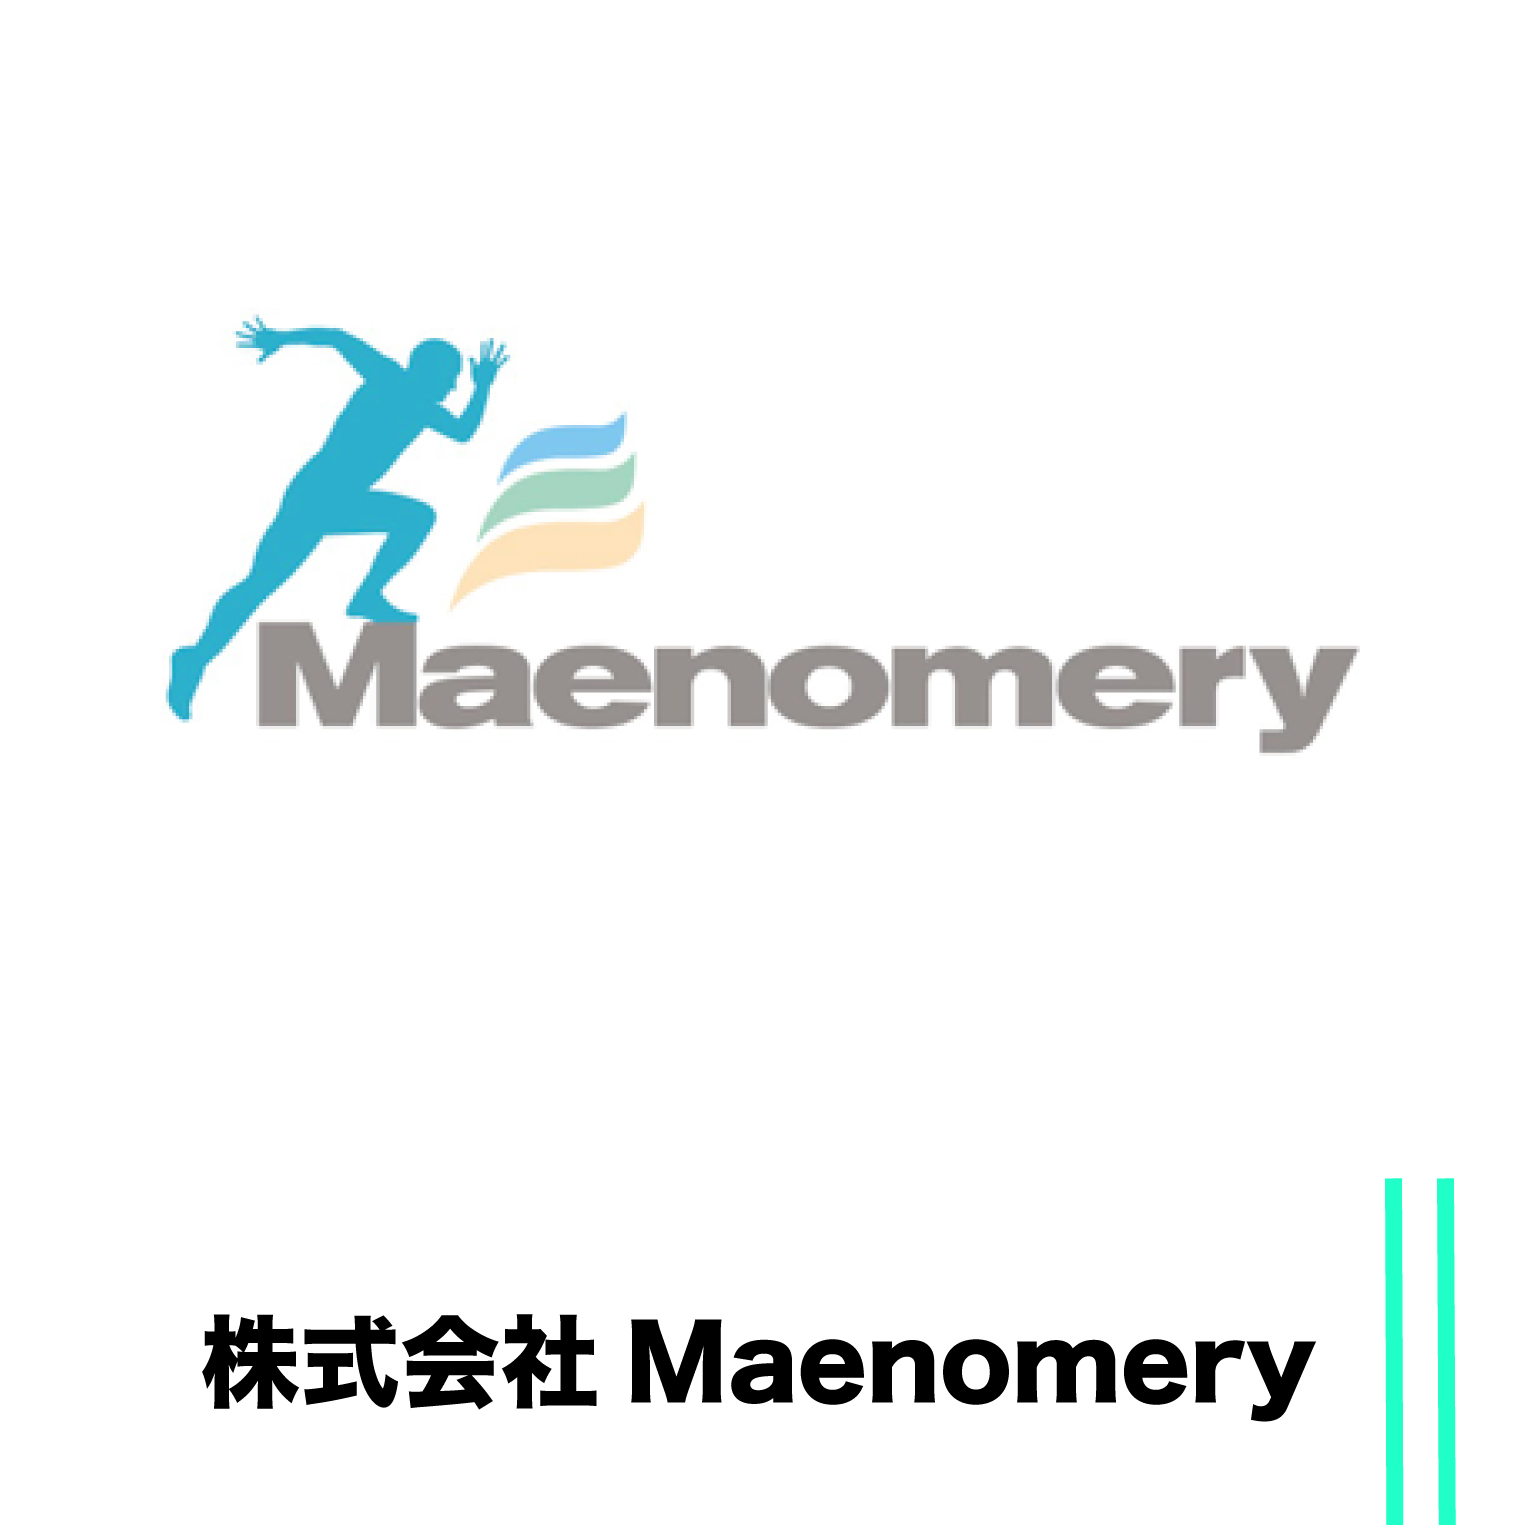 Maenomery